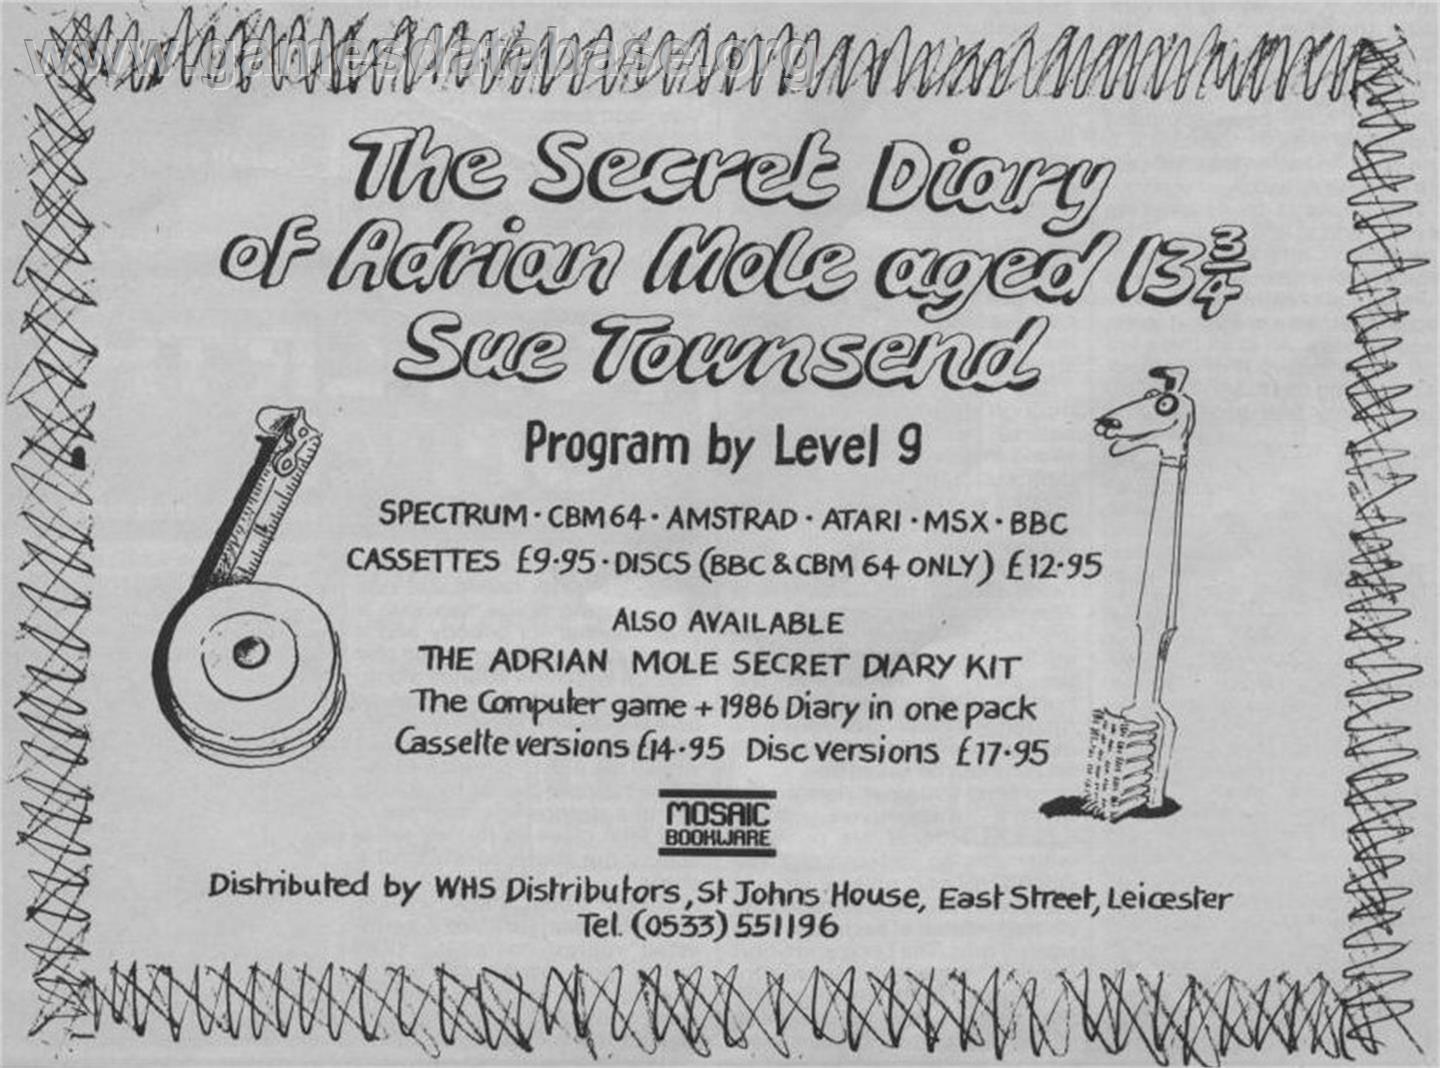 The Secret Diary of Adrian Mole - Sinclair ZX Spectrum - Artwork - Advert